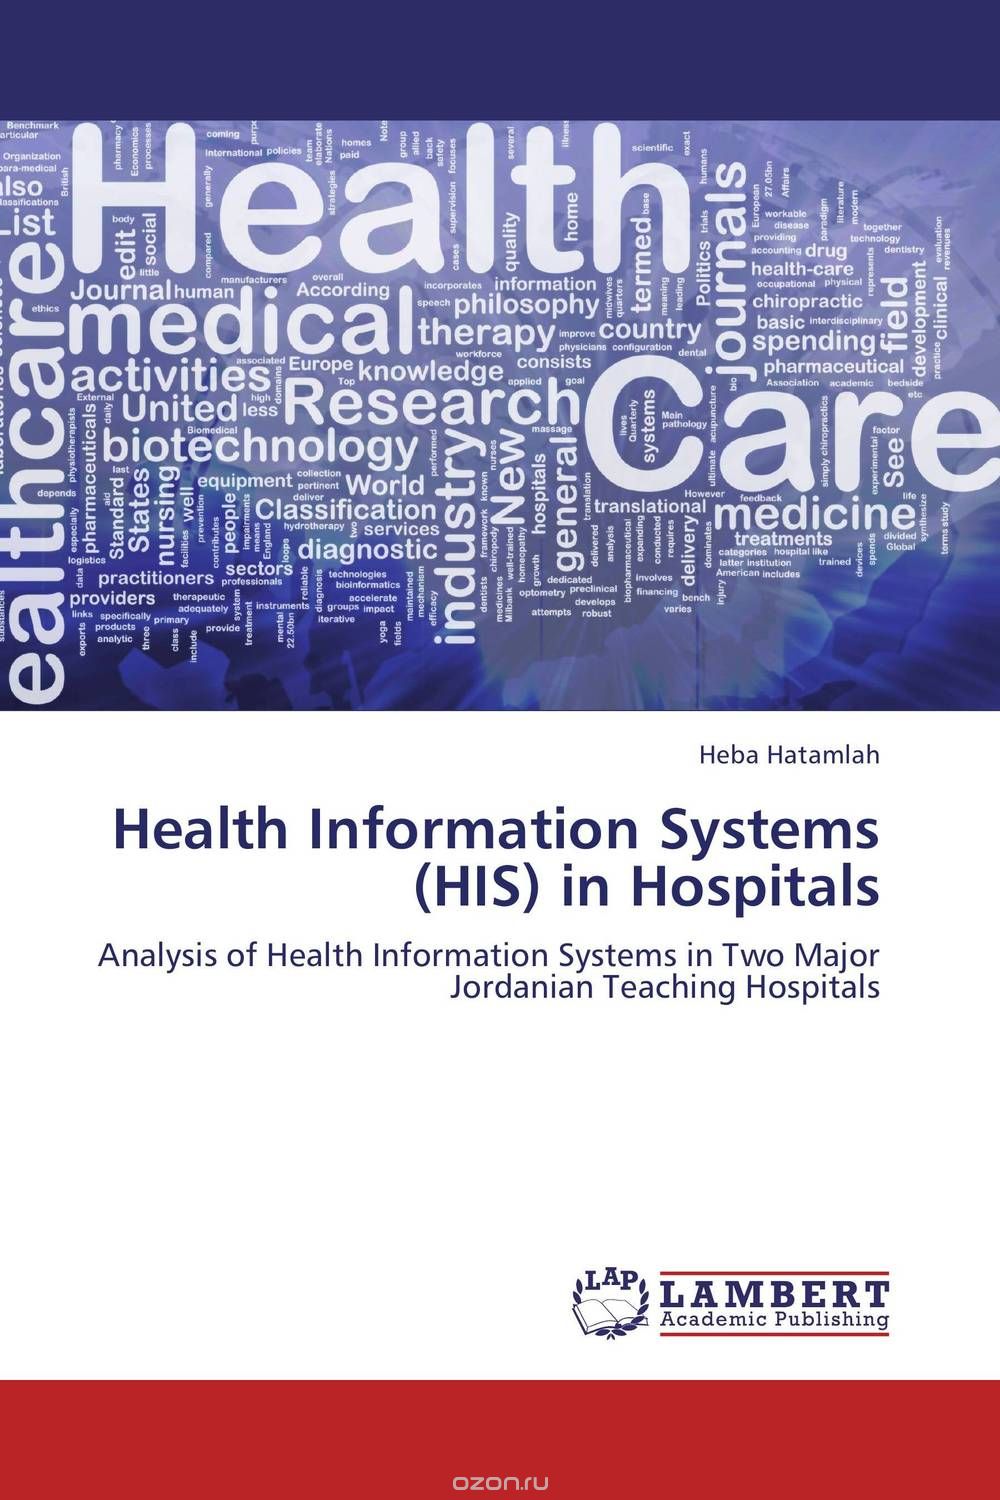 Скачать книгу "Health Information Systems (HIS) in Hospitals"